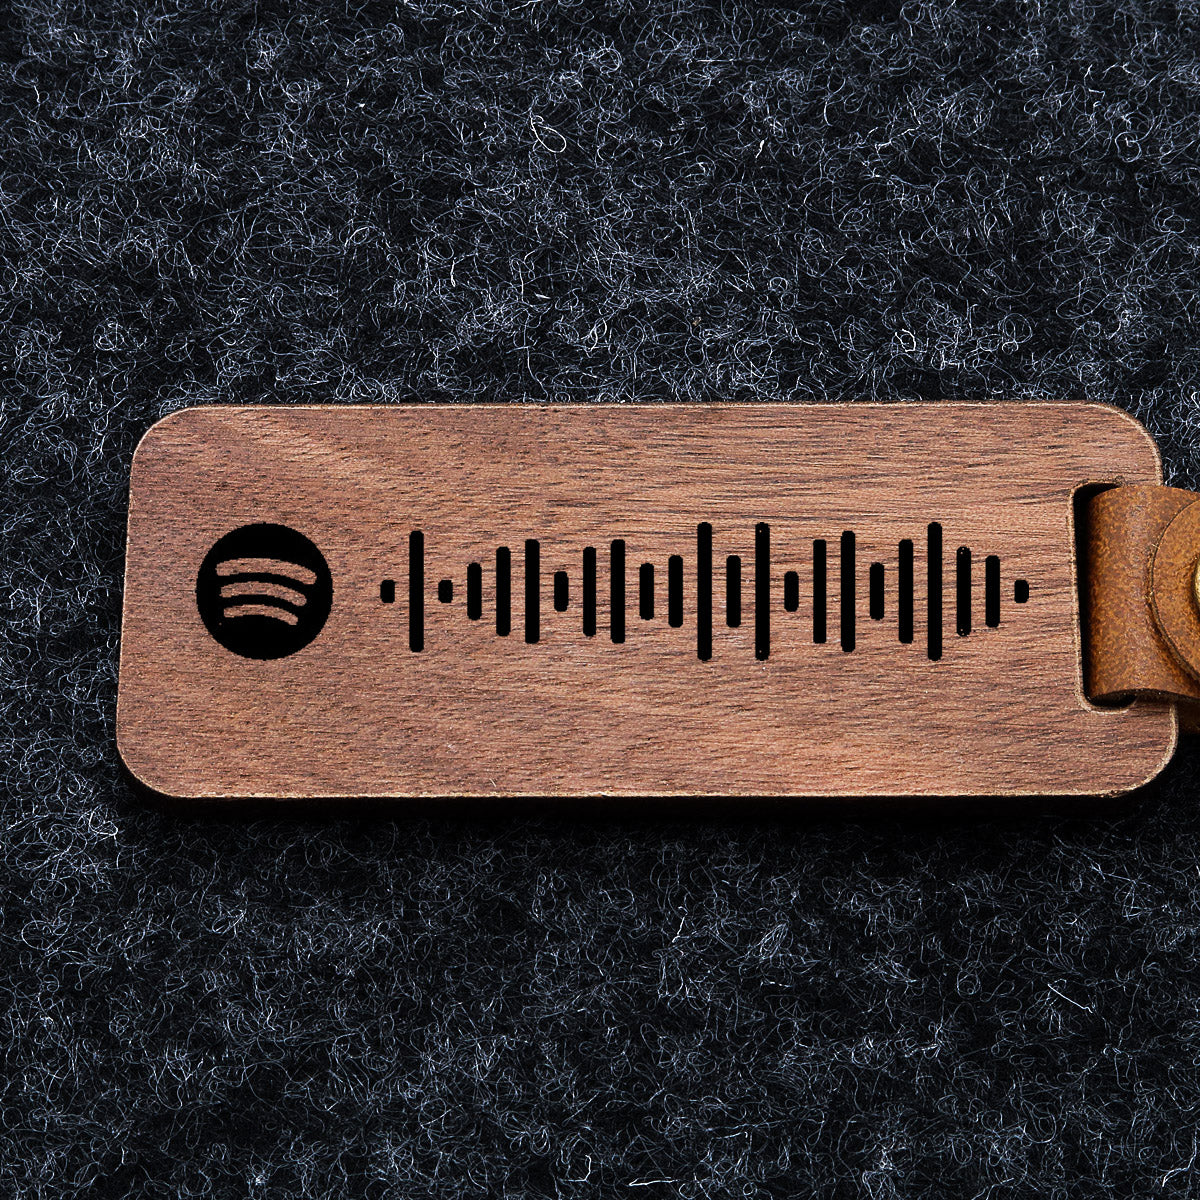 Spotify nyckelring i trä med Spotify-kod